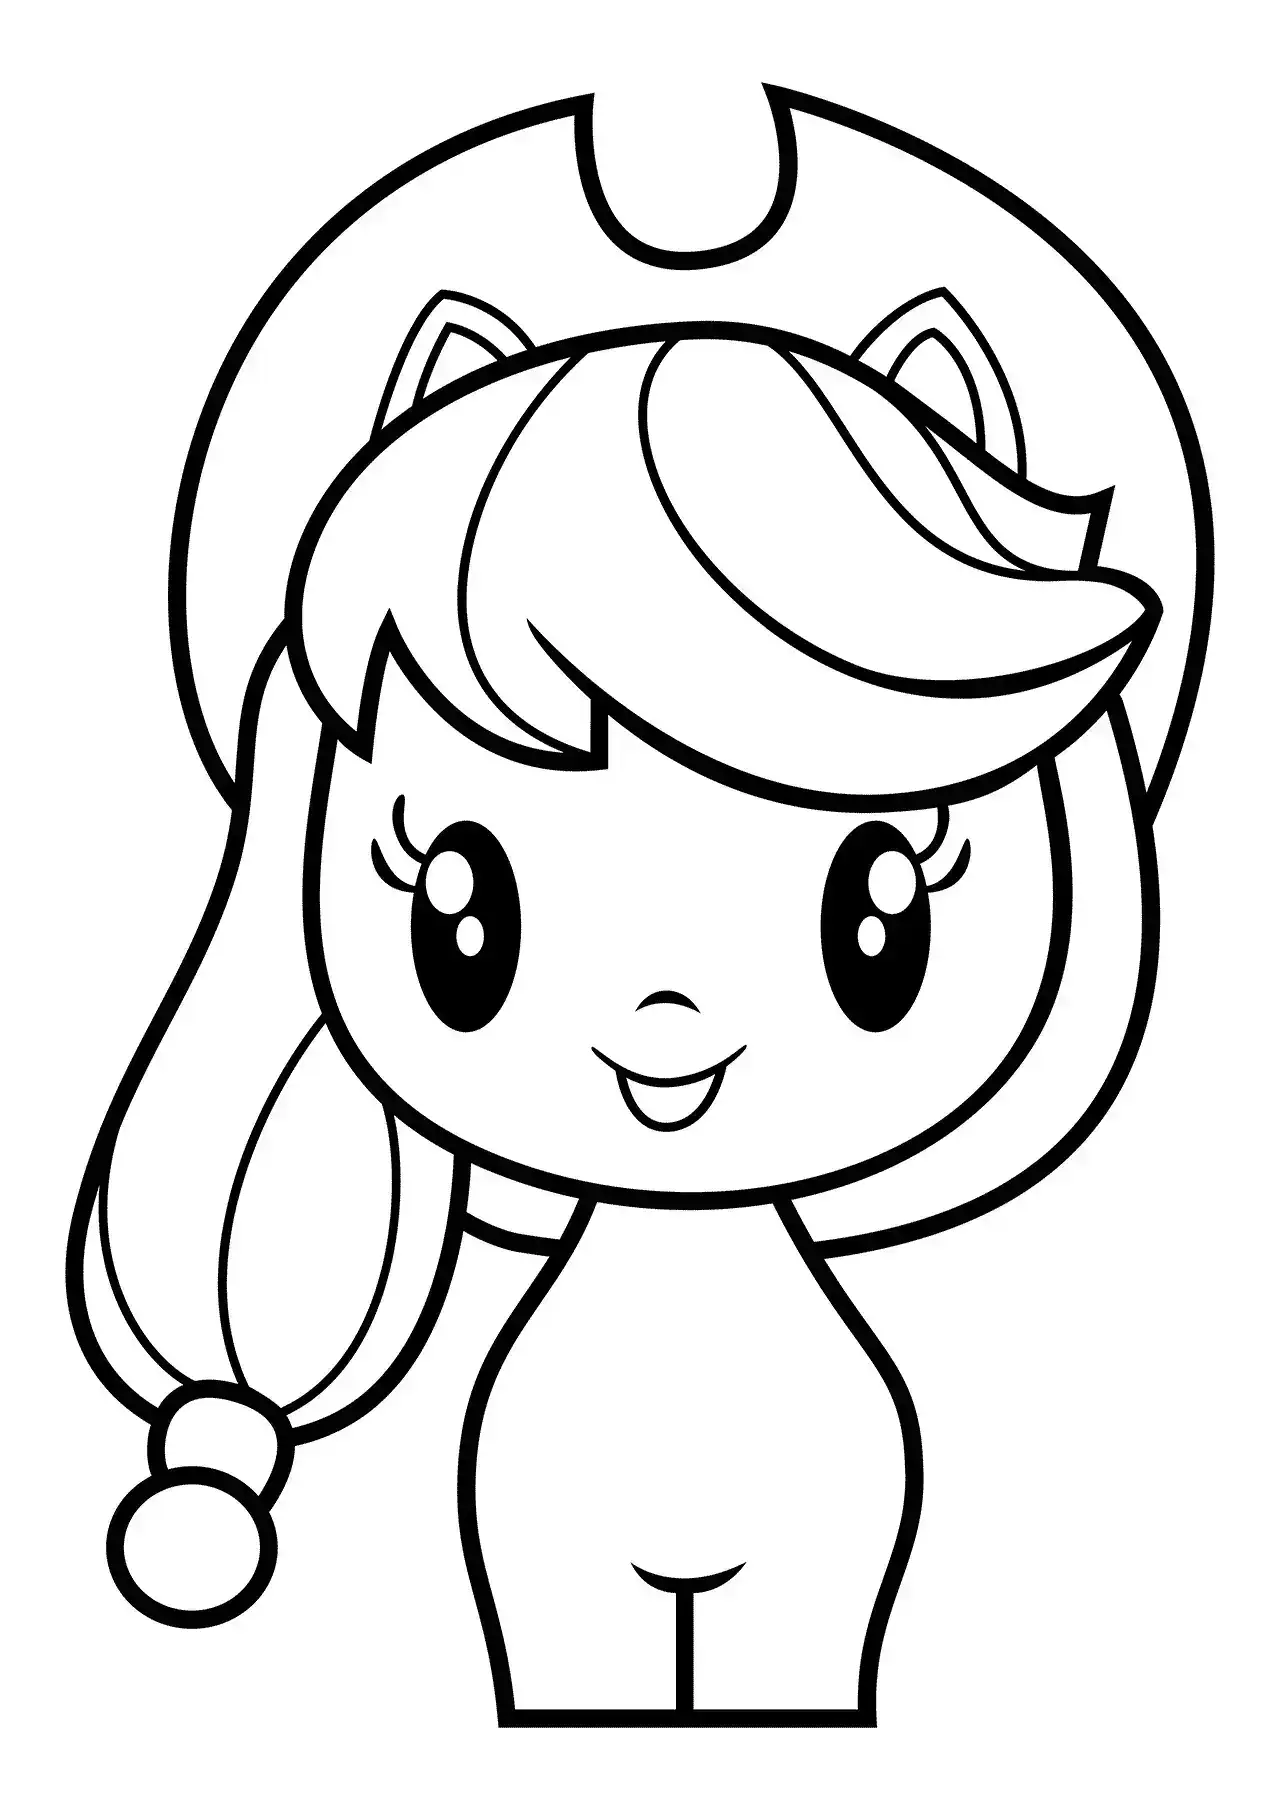 Dibujo de Applejack de MLP Cutie Mark Crew para imprimir gratis